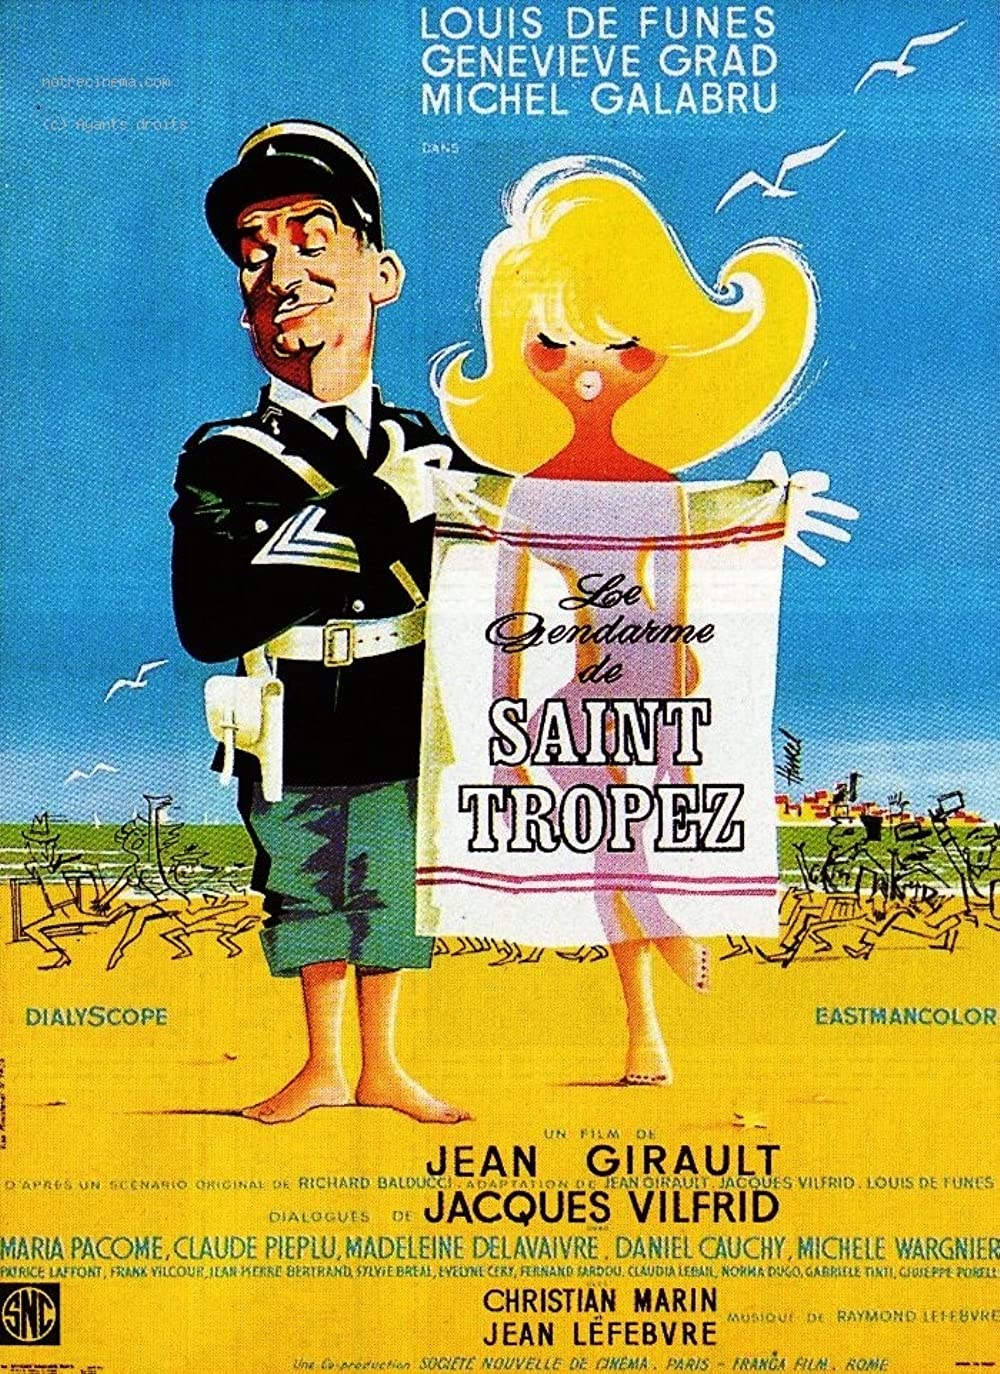 Filmbeschreibung zu Le gendarme de Saint-Tropez